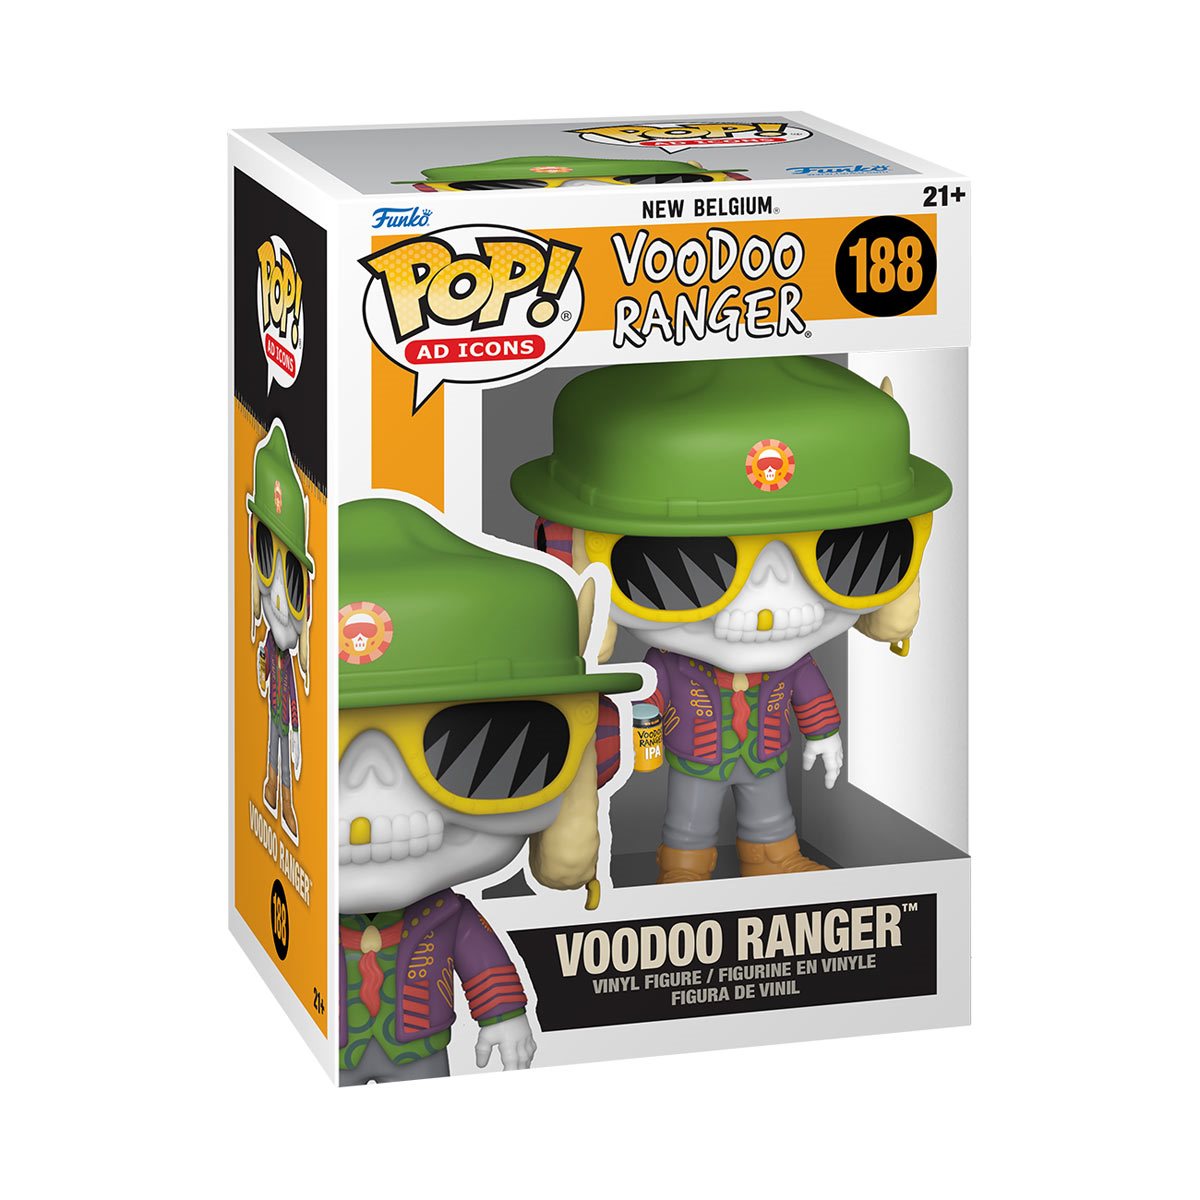 Funko Pop! Icons New Belgium - Voodoo Ranger #188